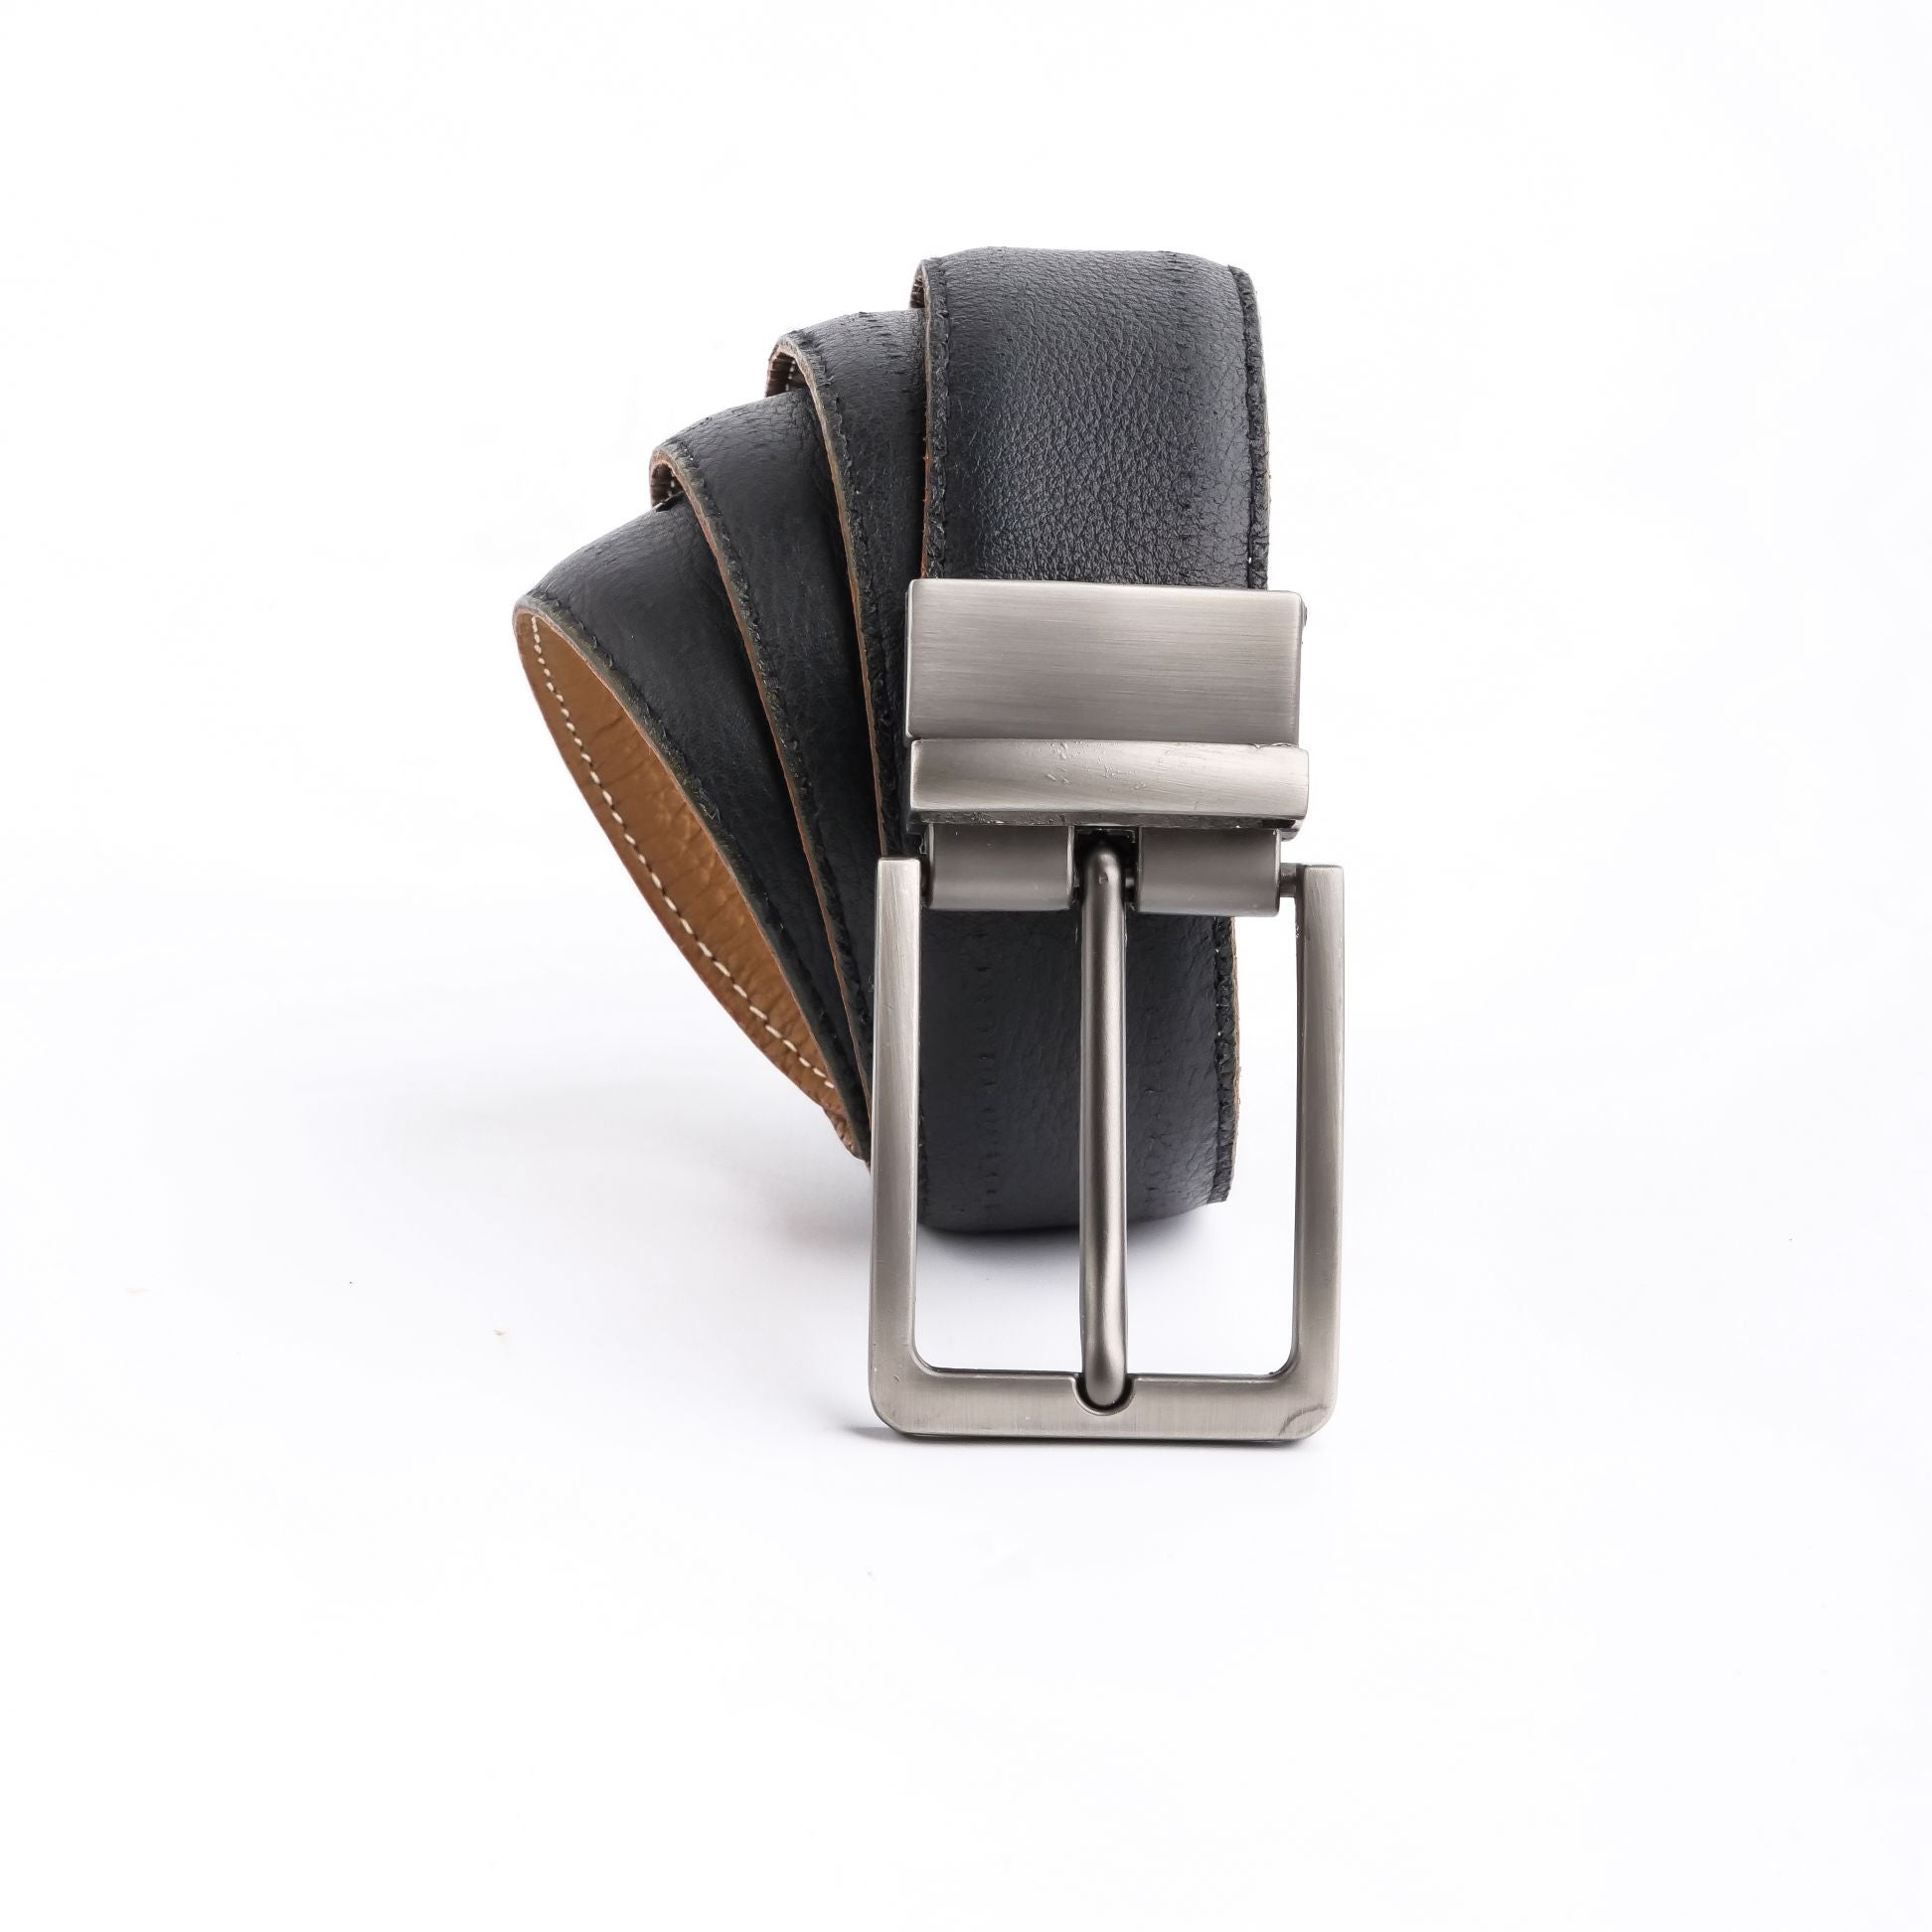 Reversible Belt - Tan-Dark Brown - Smooth Leather